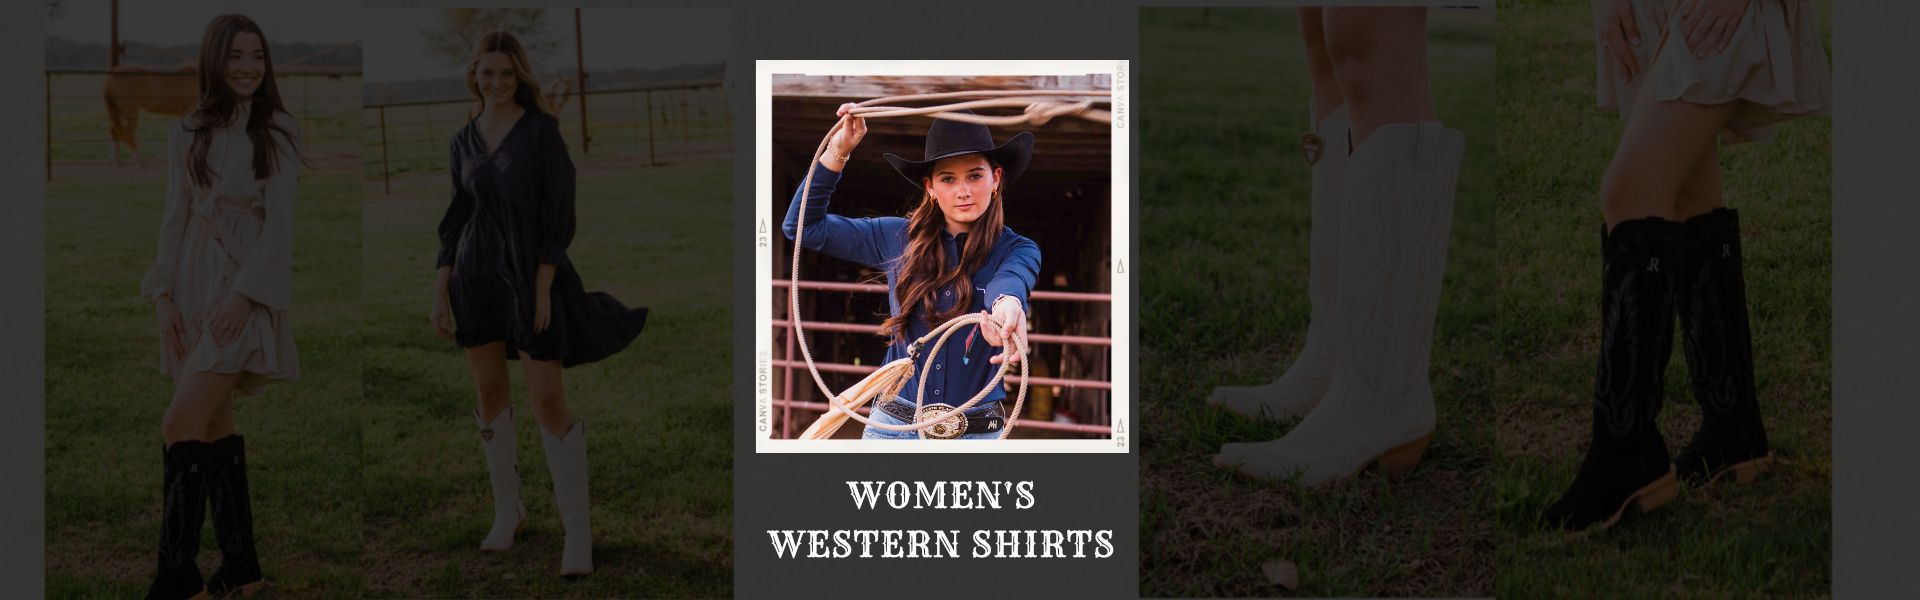 Women's Western Shirts